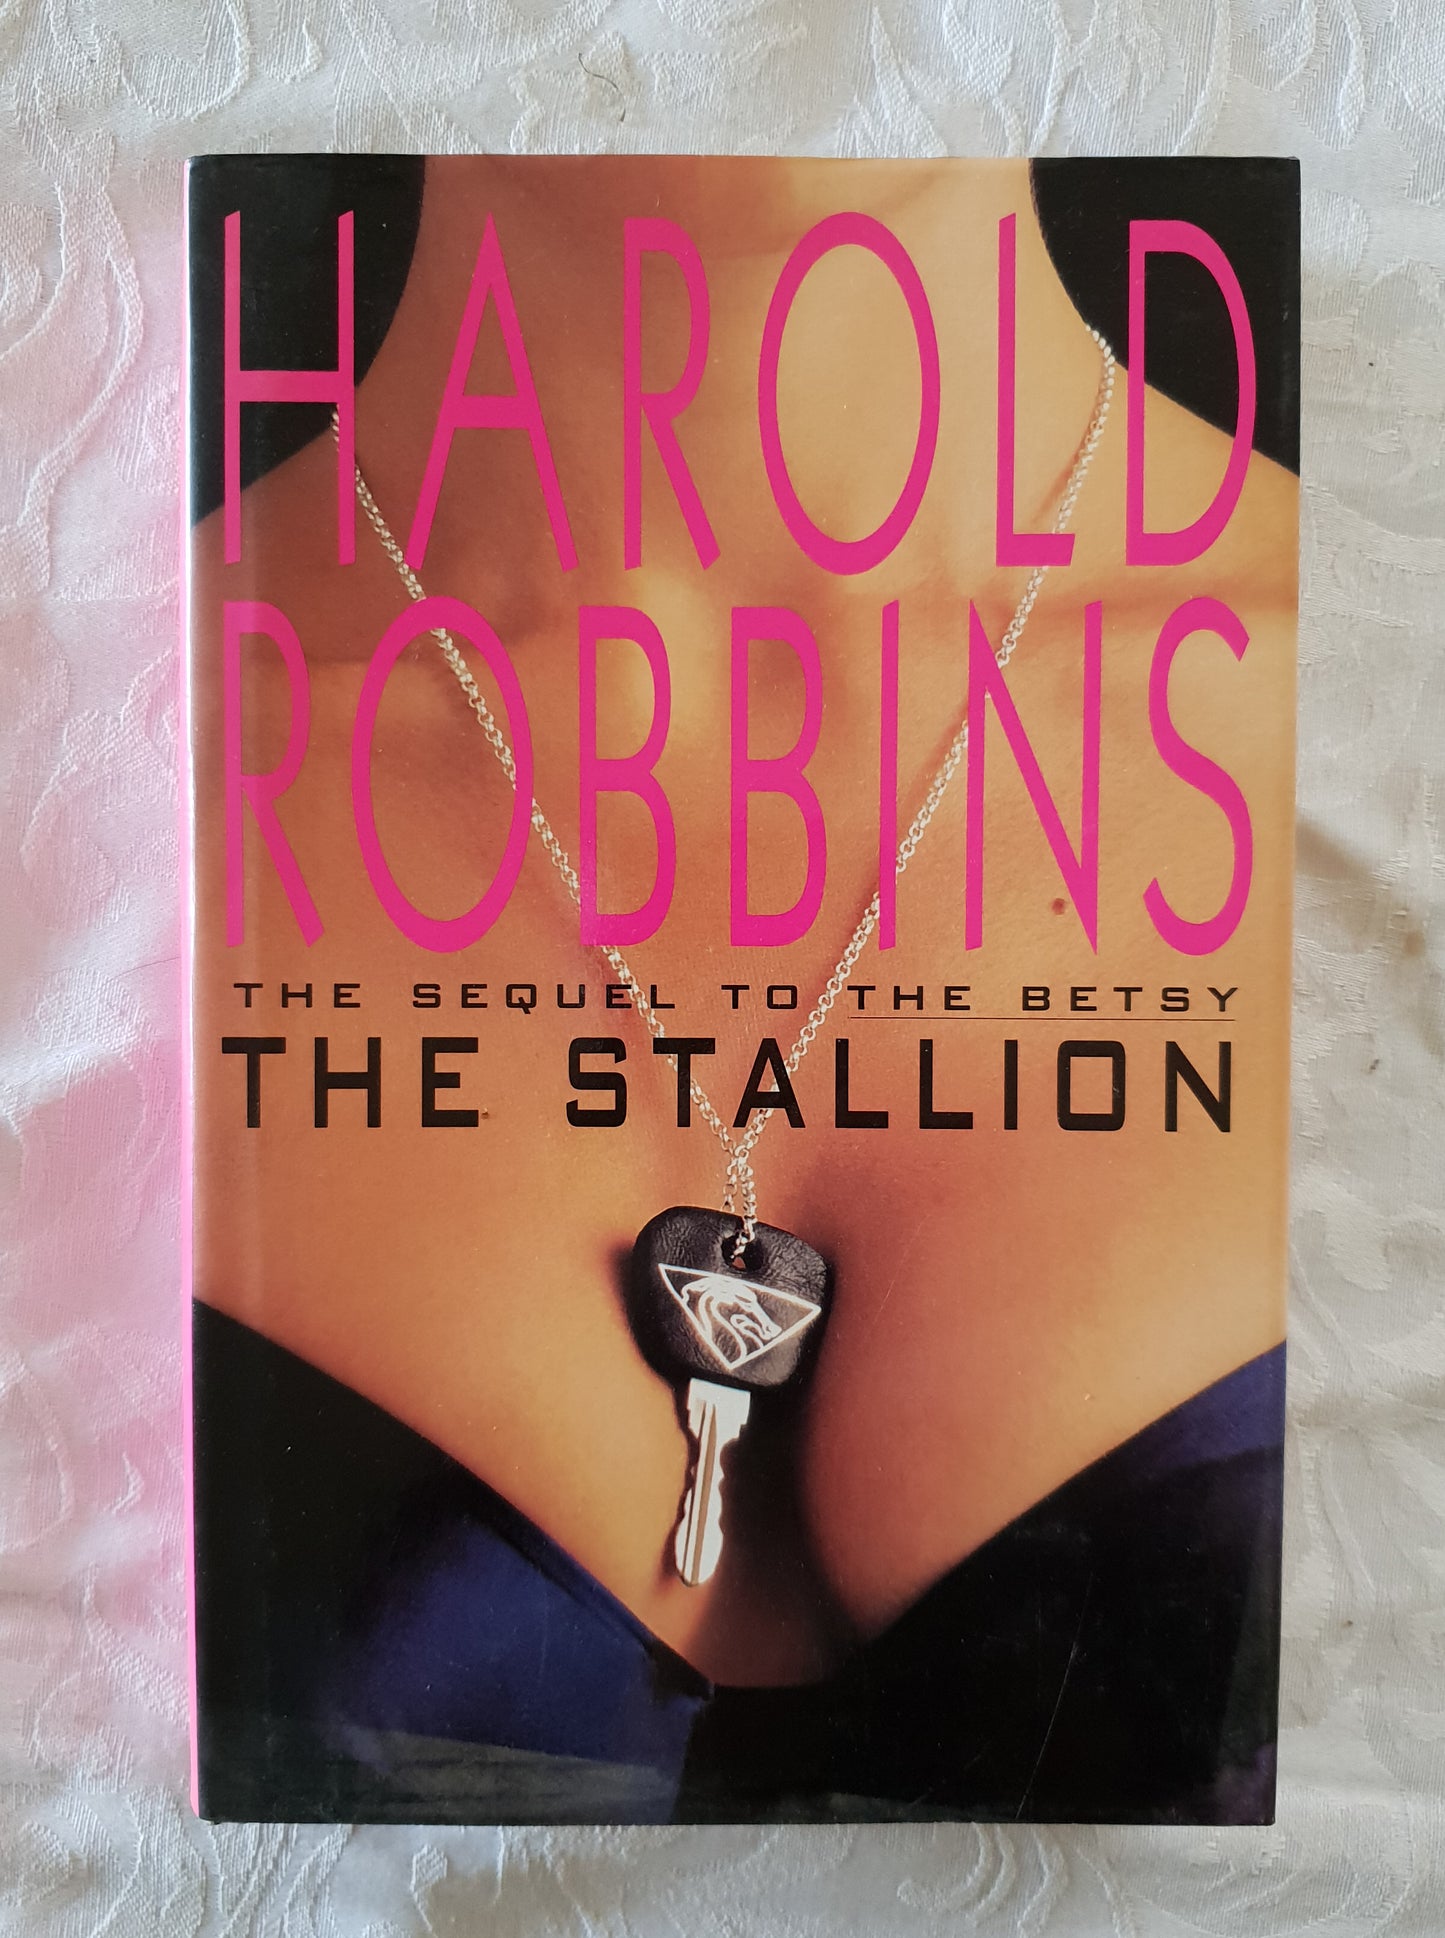 The Stallion  by Harold Robbins